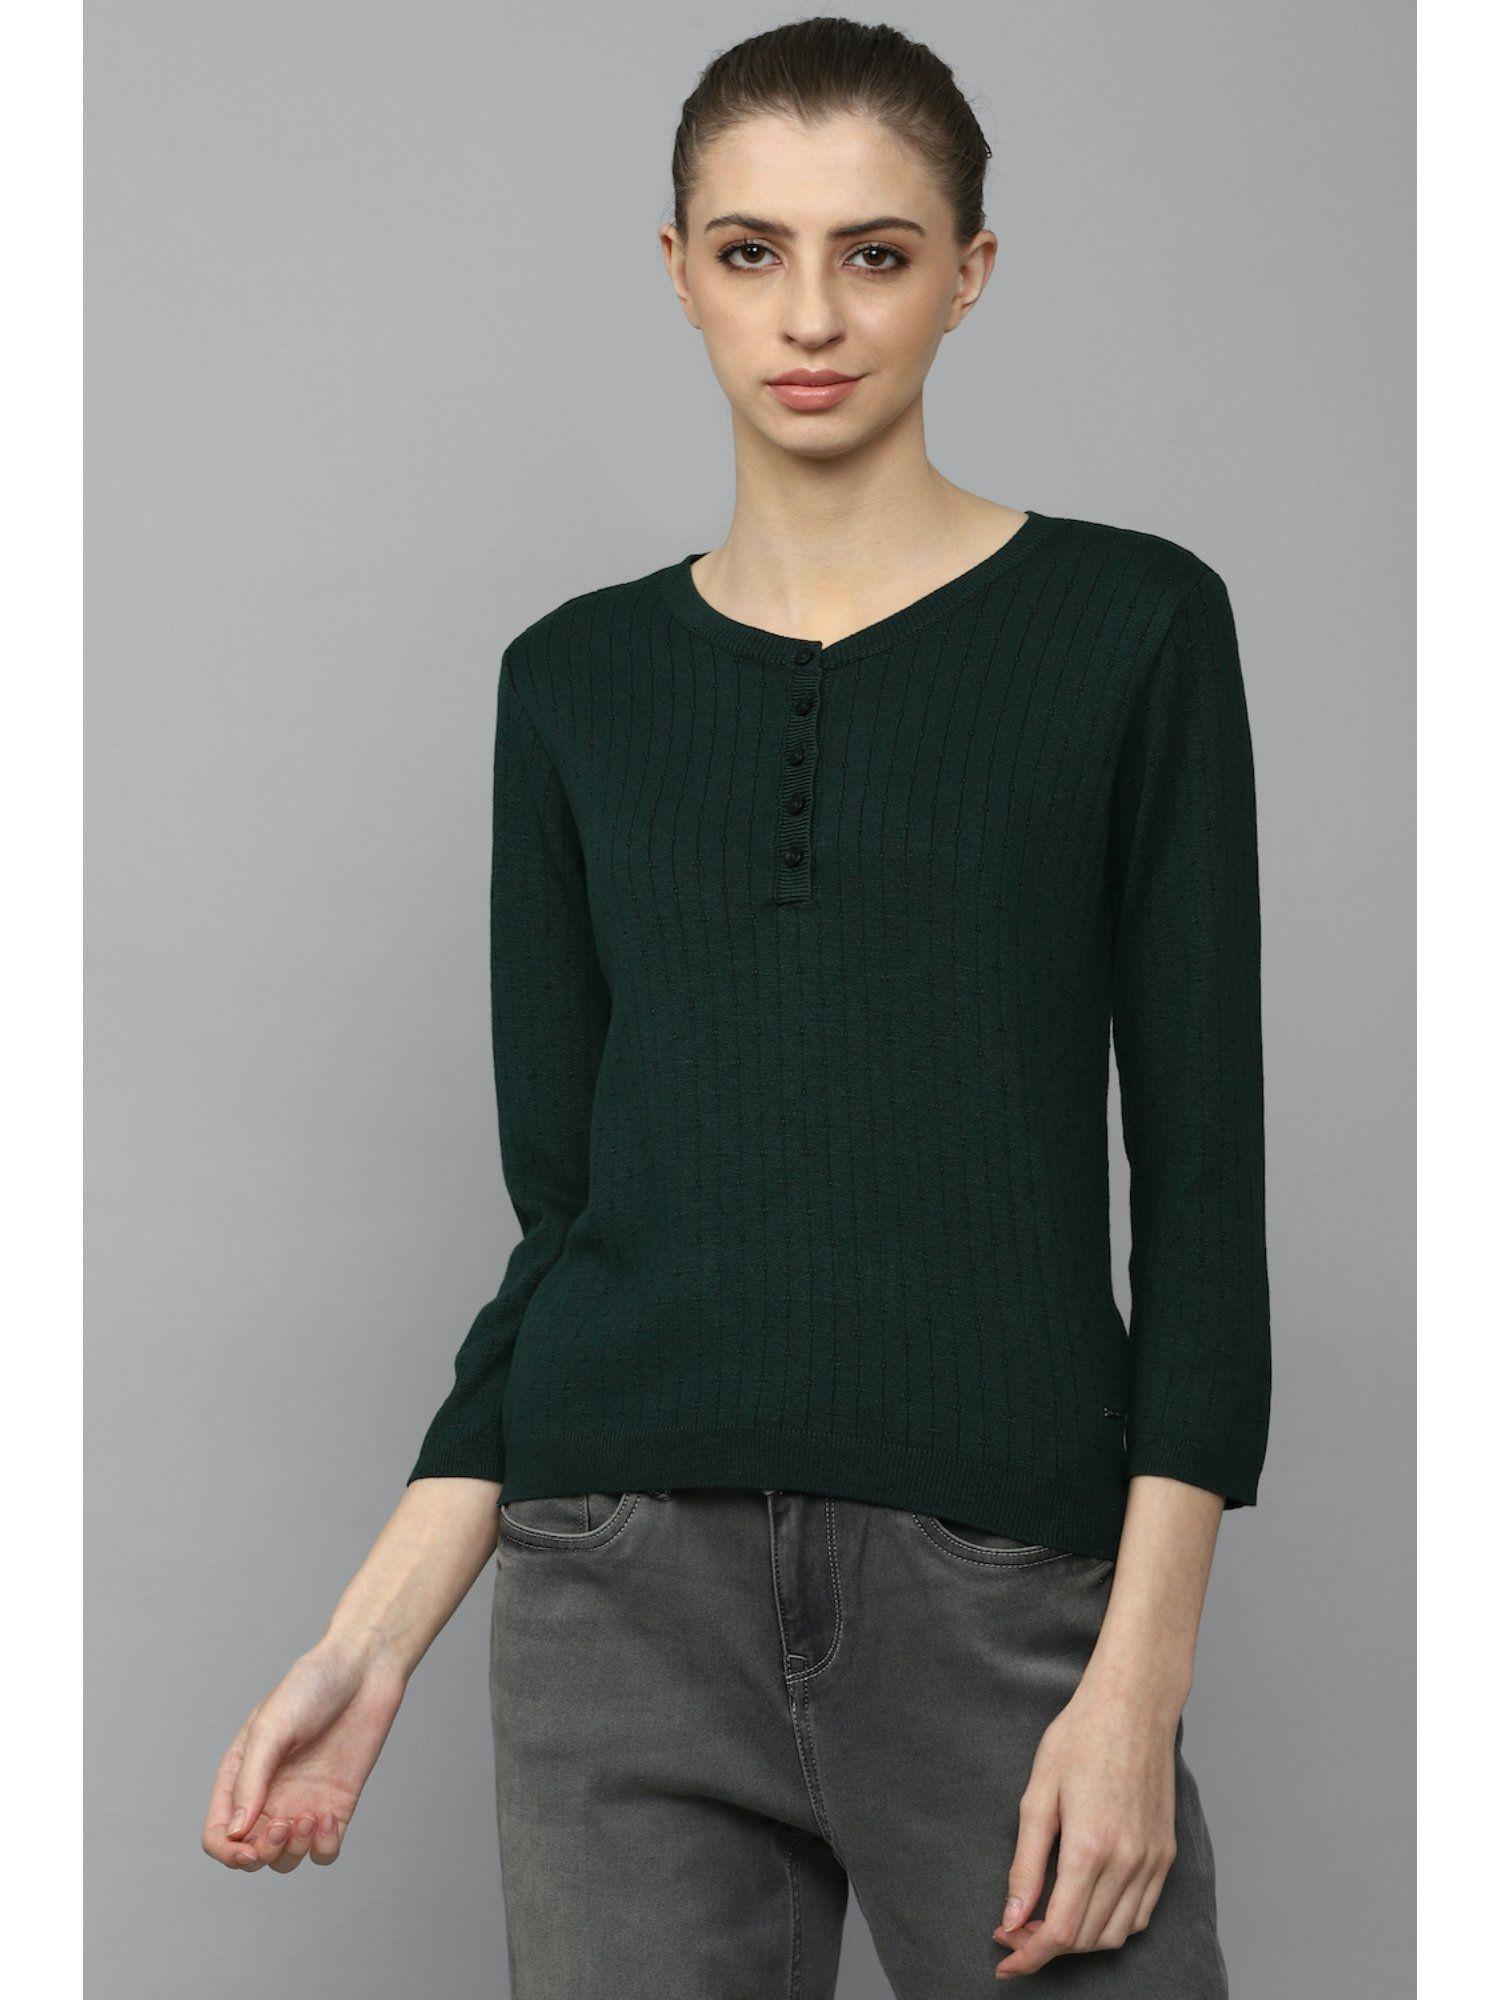 green-textured-sweater